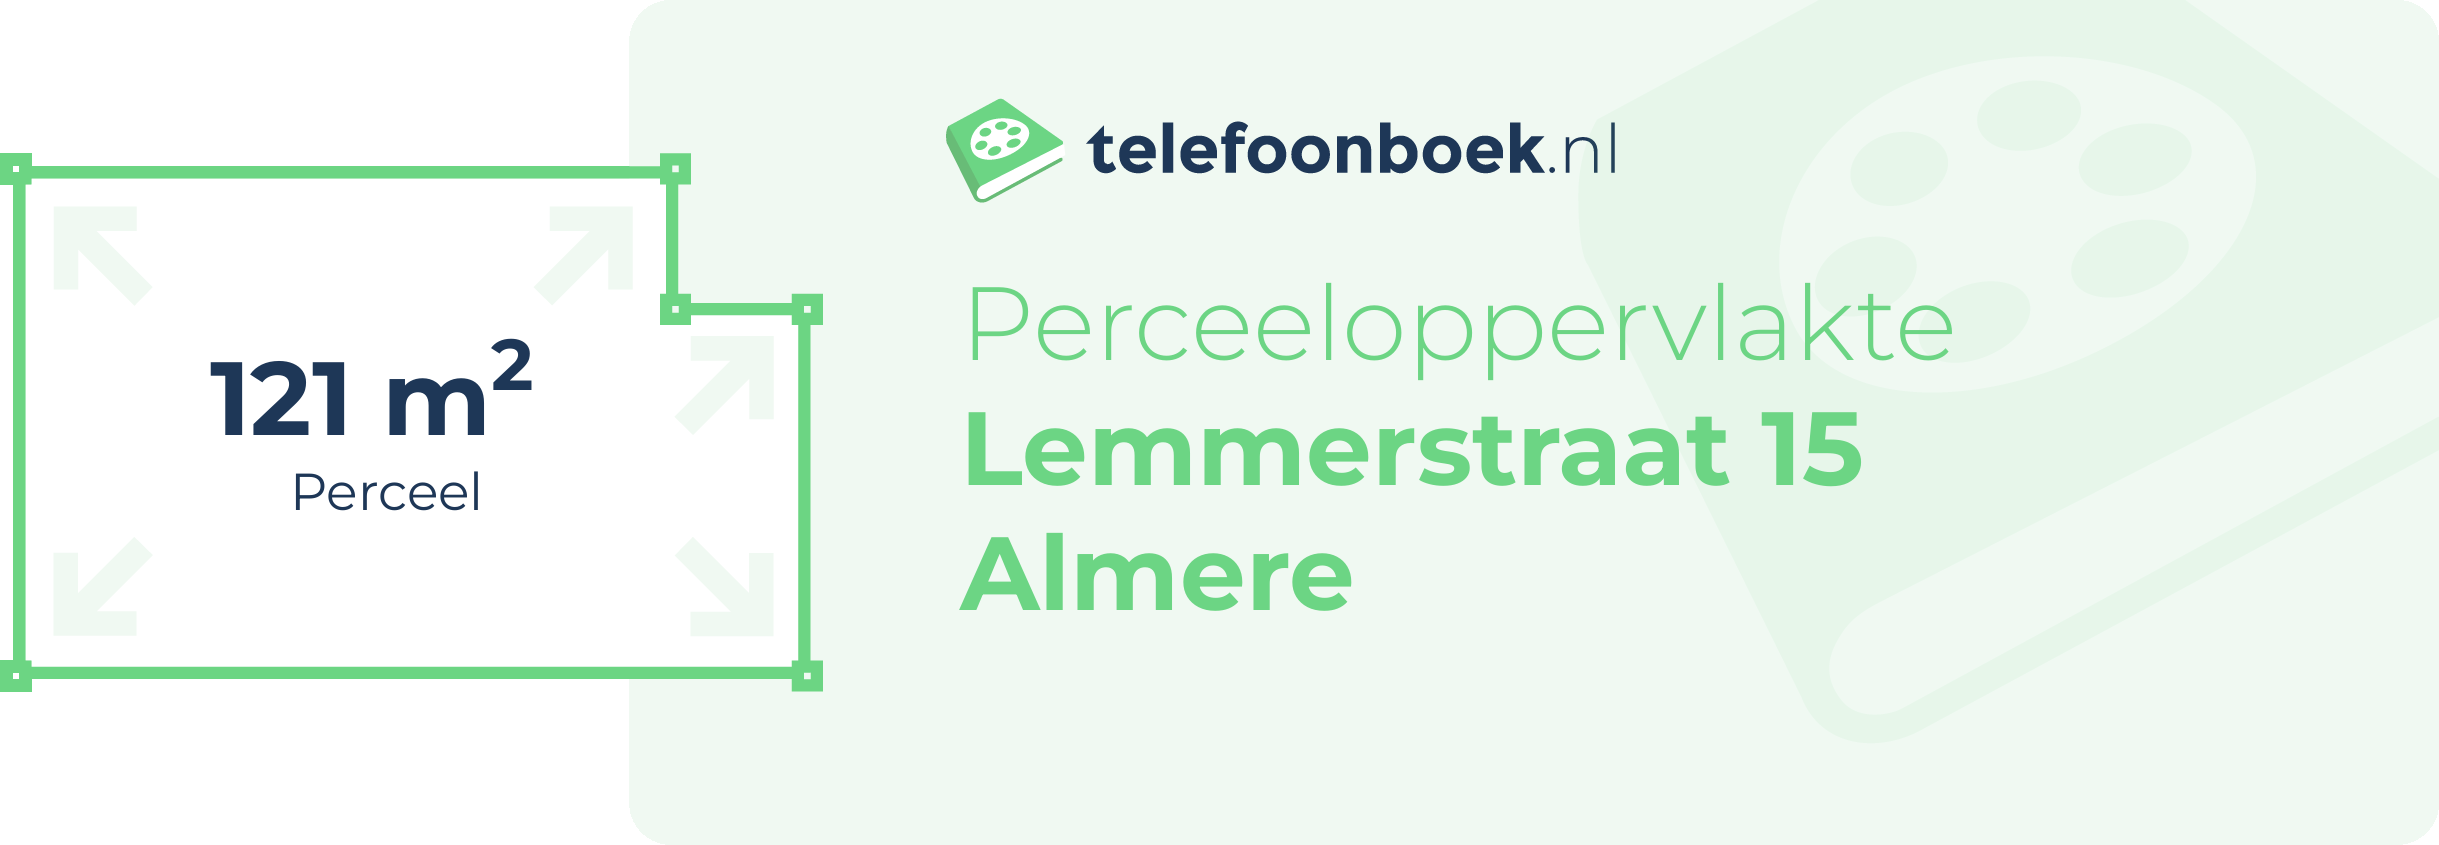 Perceeloppervlakte Lemmerstraat 15 Almere